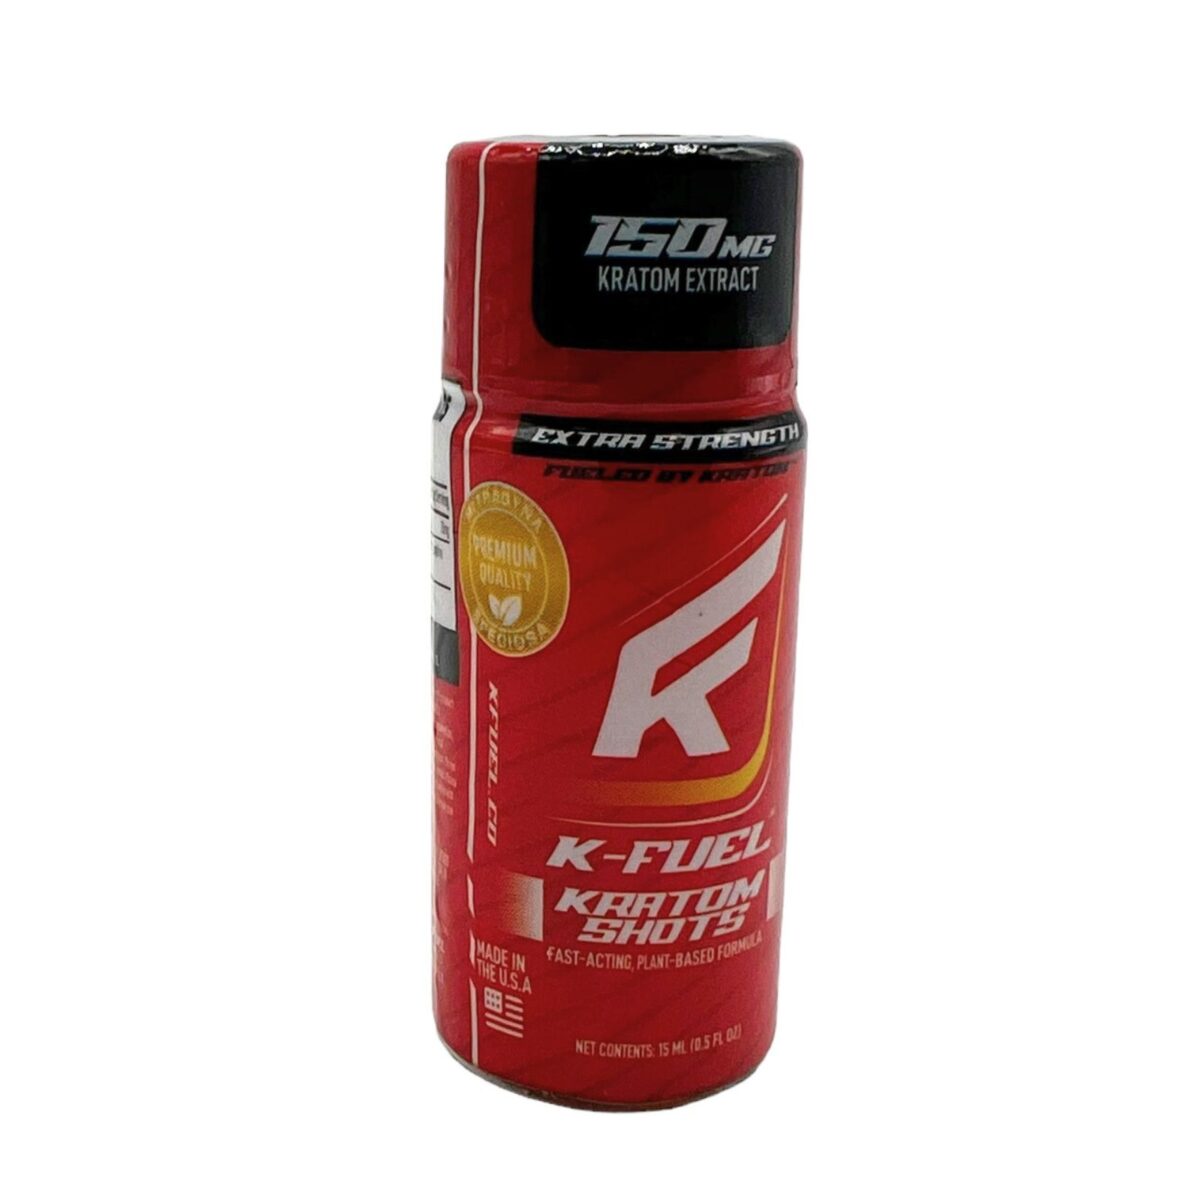 K-Fuel Kratom Shot, 150mg – 15ml